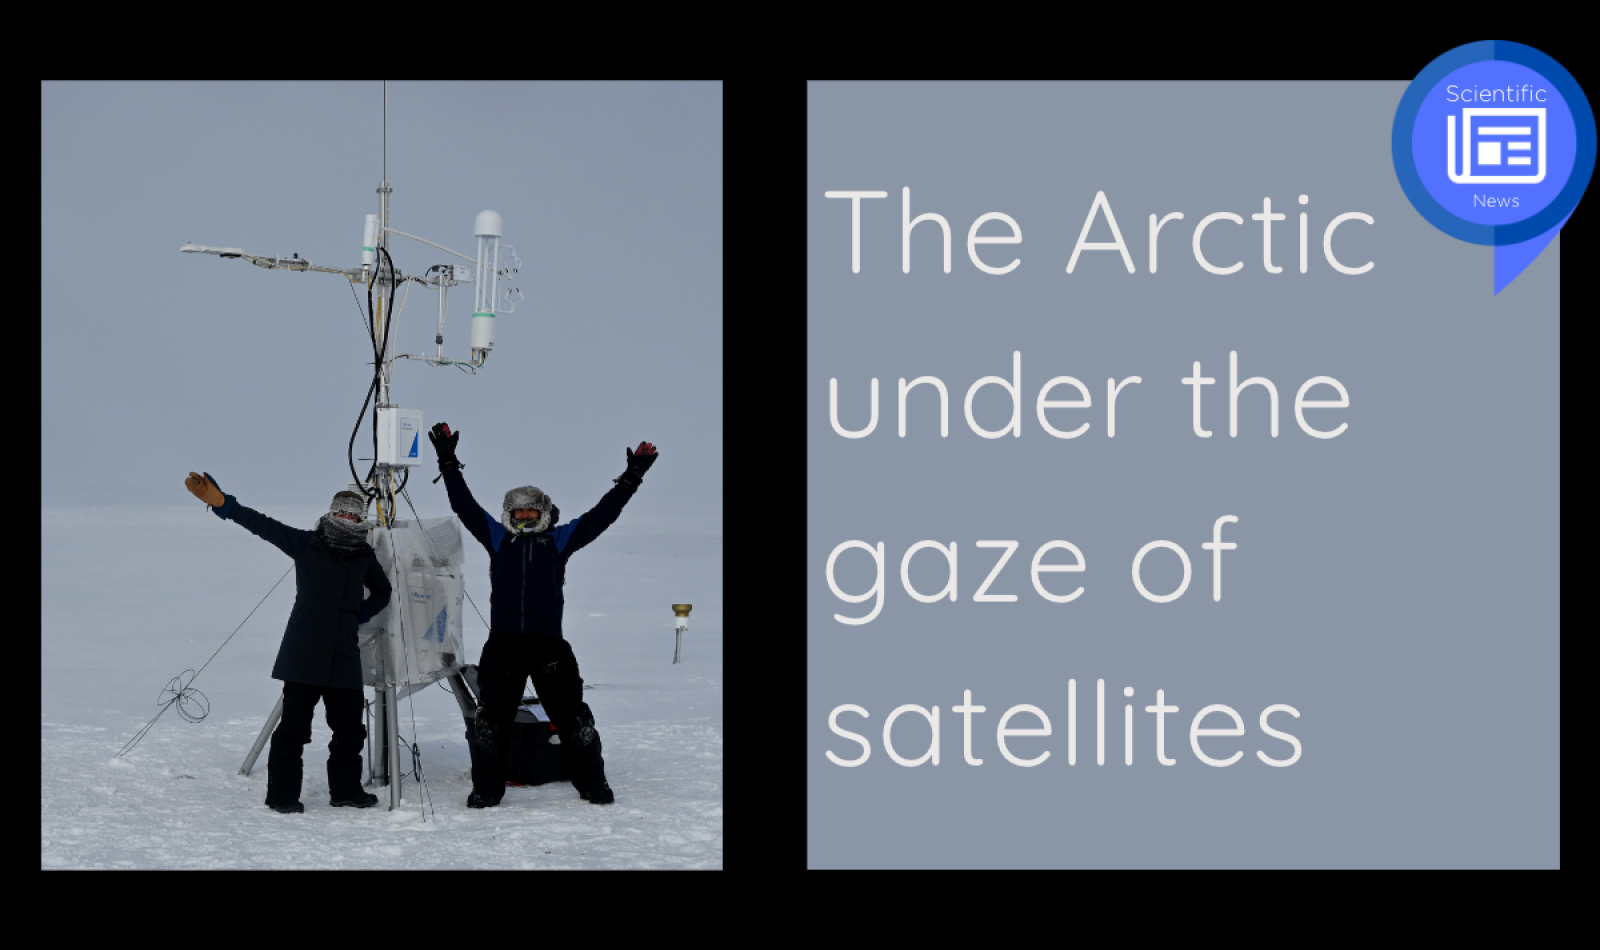 The Arctic under the gaze of satellites